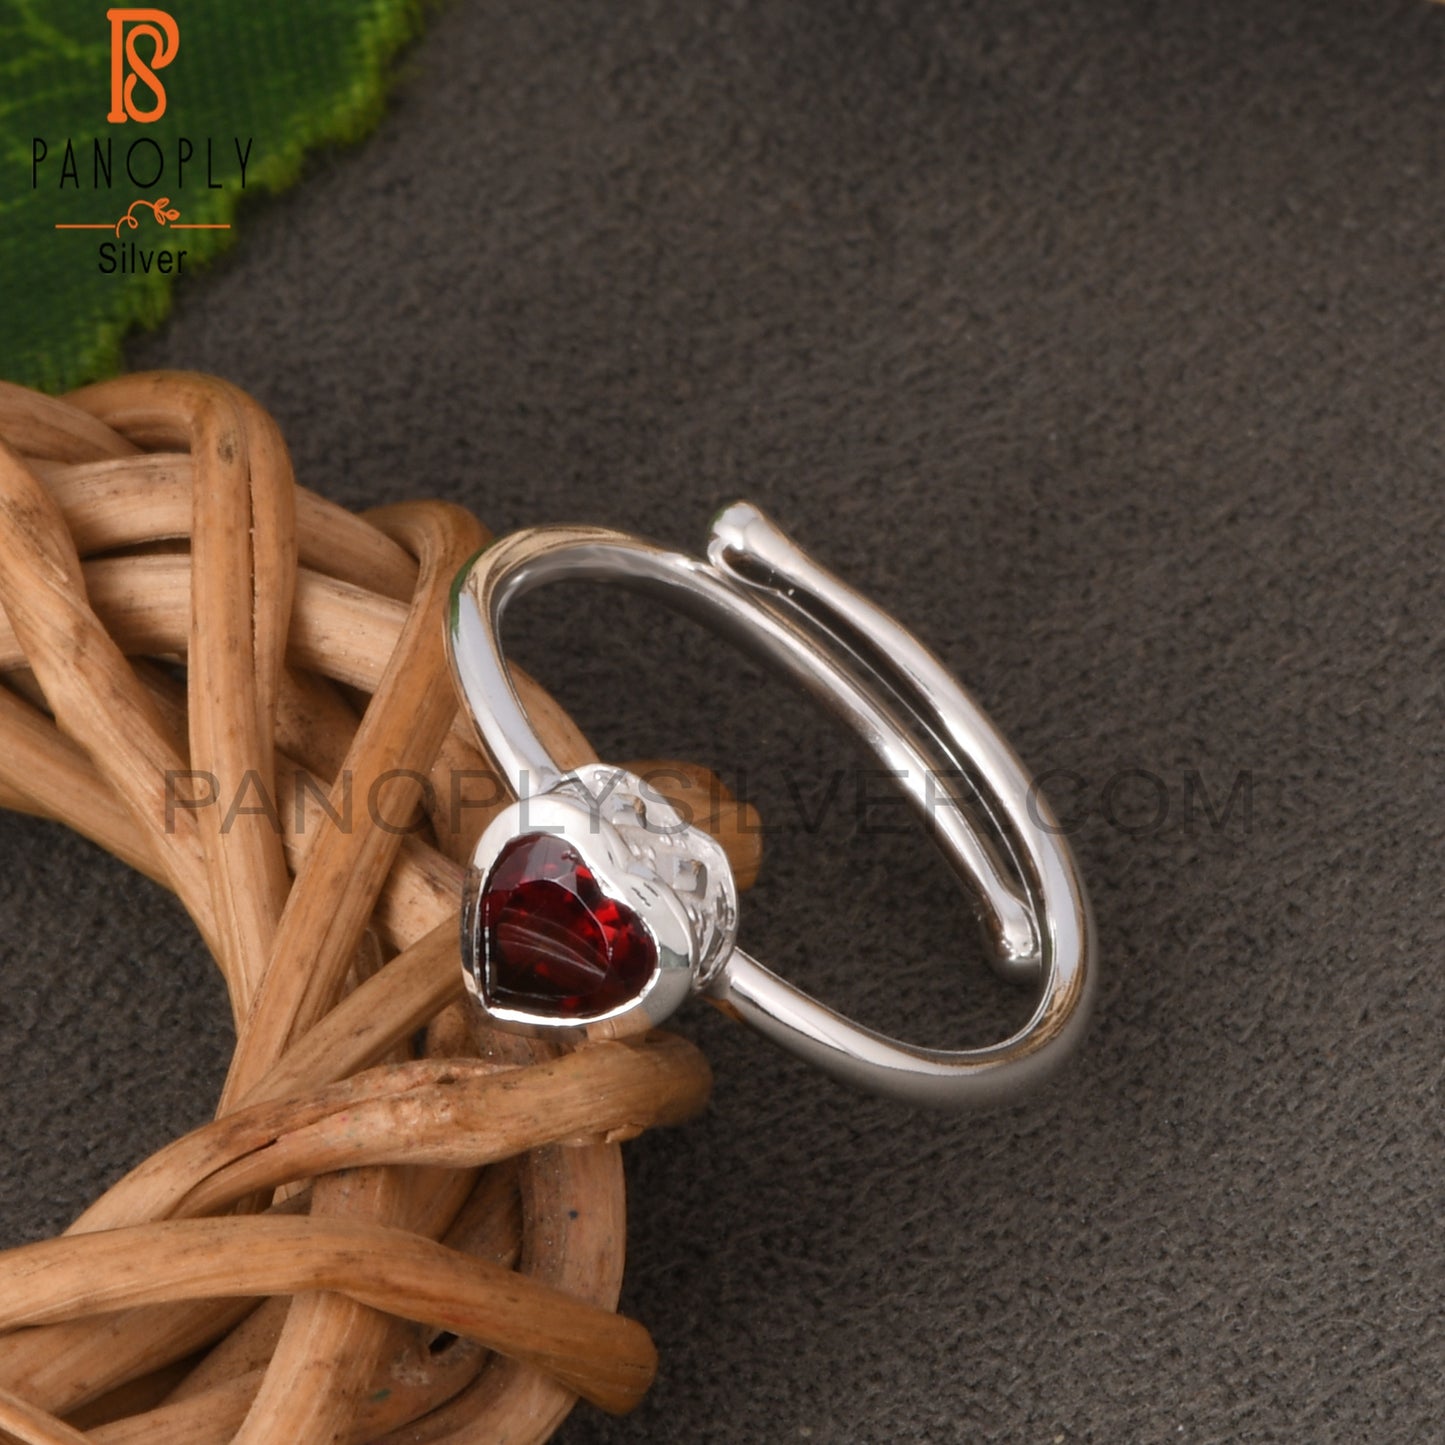 Garnet Heart Shape 925 Sterling Silver Ring